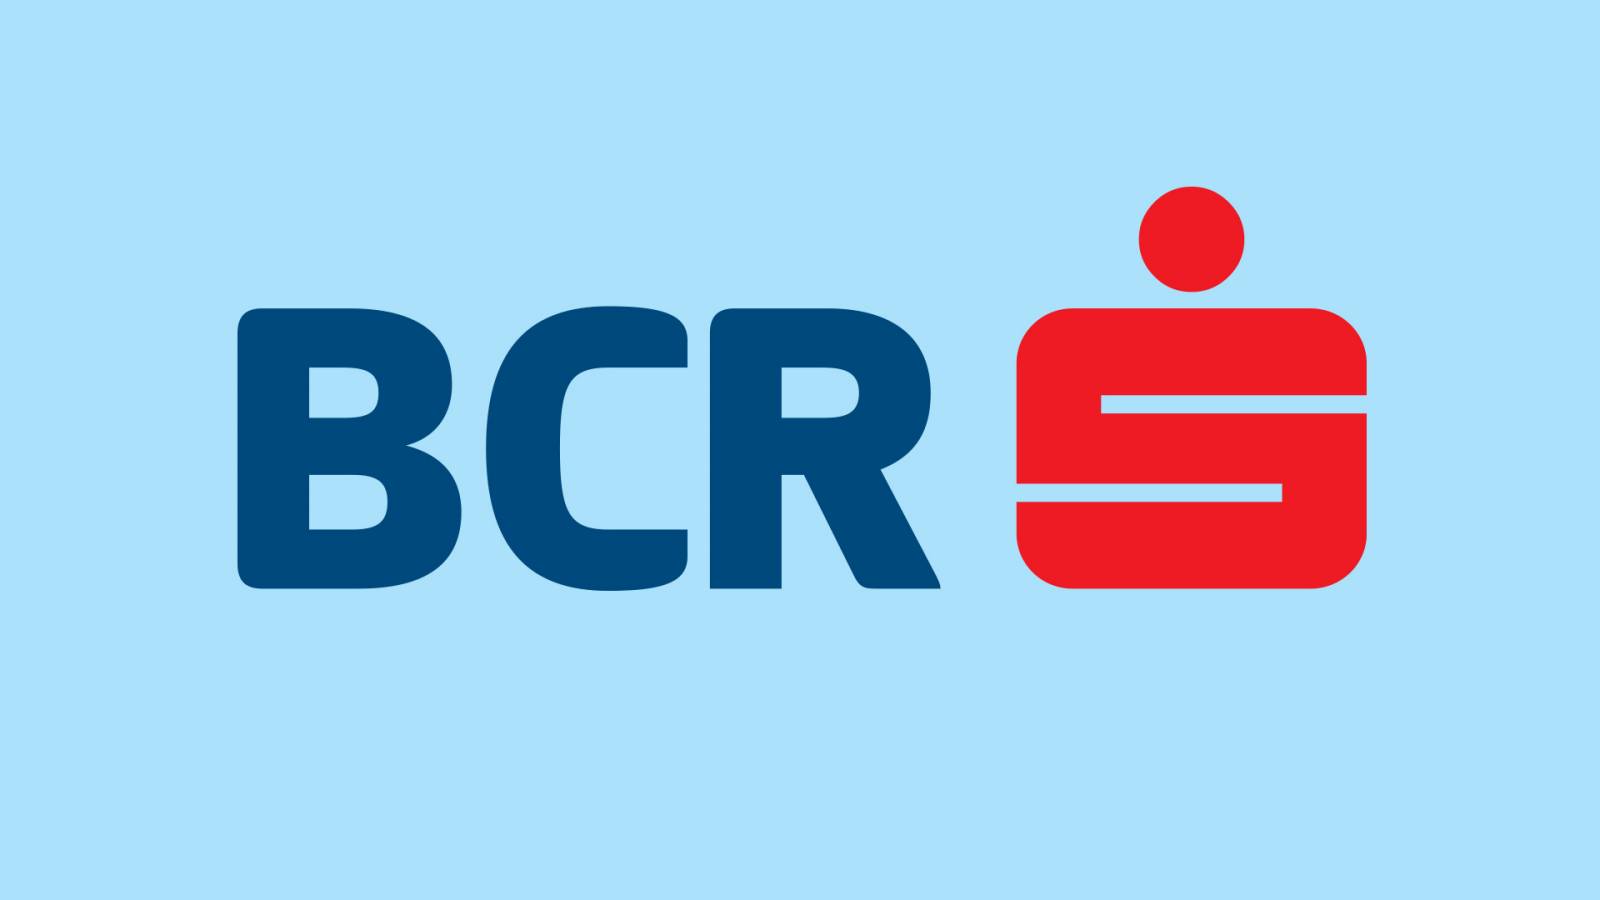 BCR Rumänien wartet